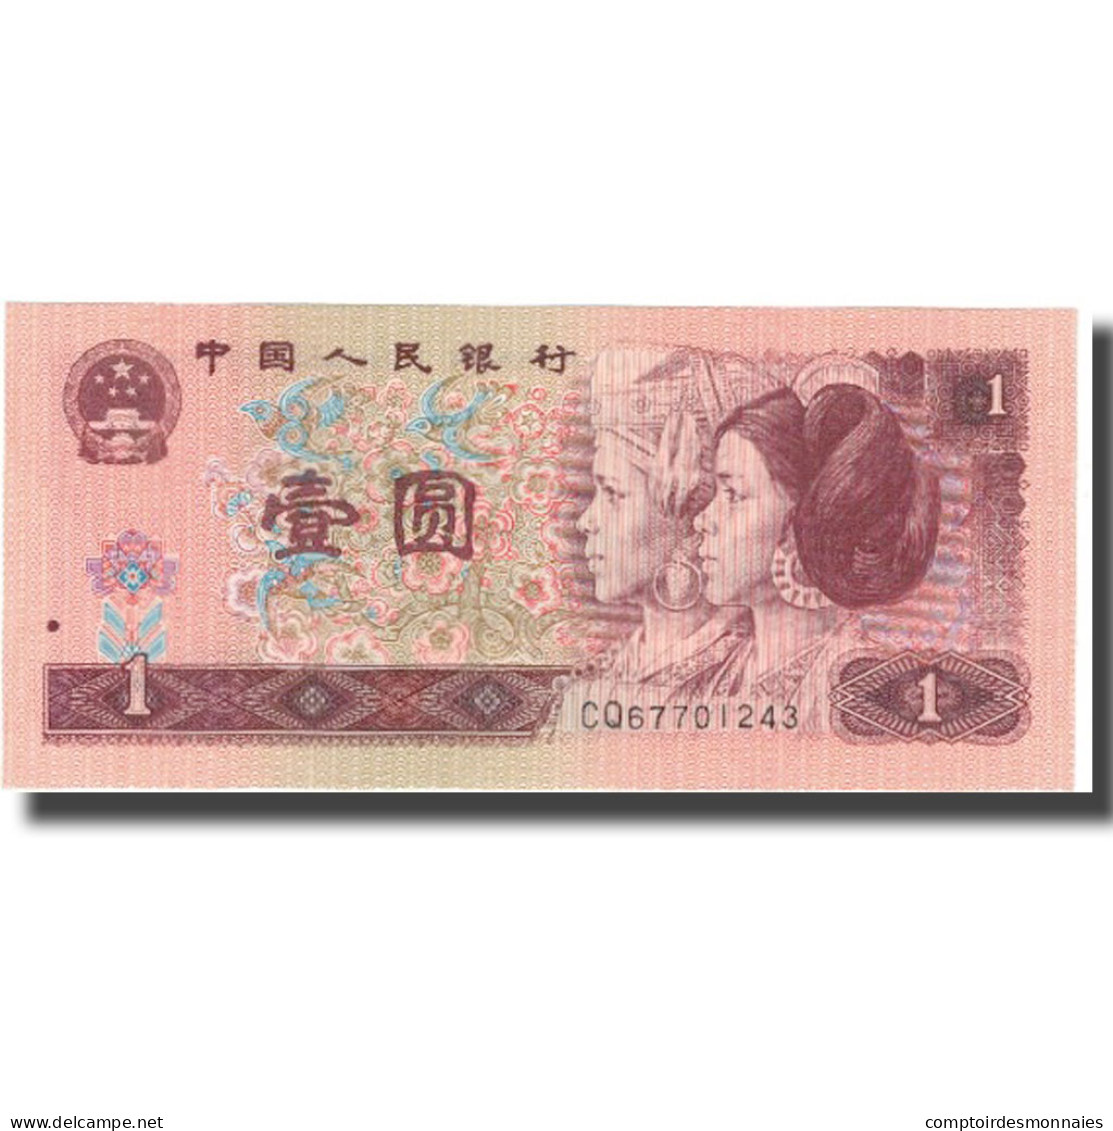 Billet, Chine, 1 Yüan, 1996, KM:884b, NEUF - China